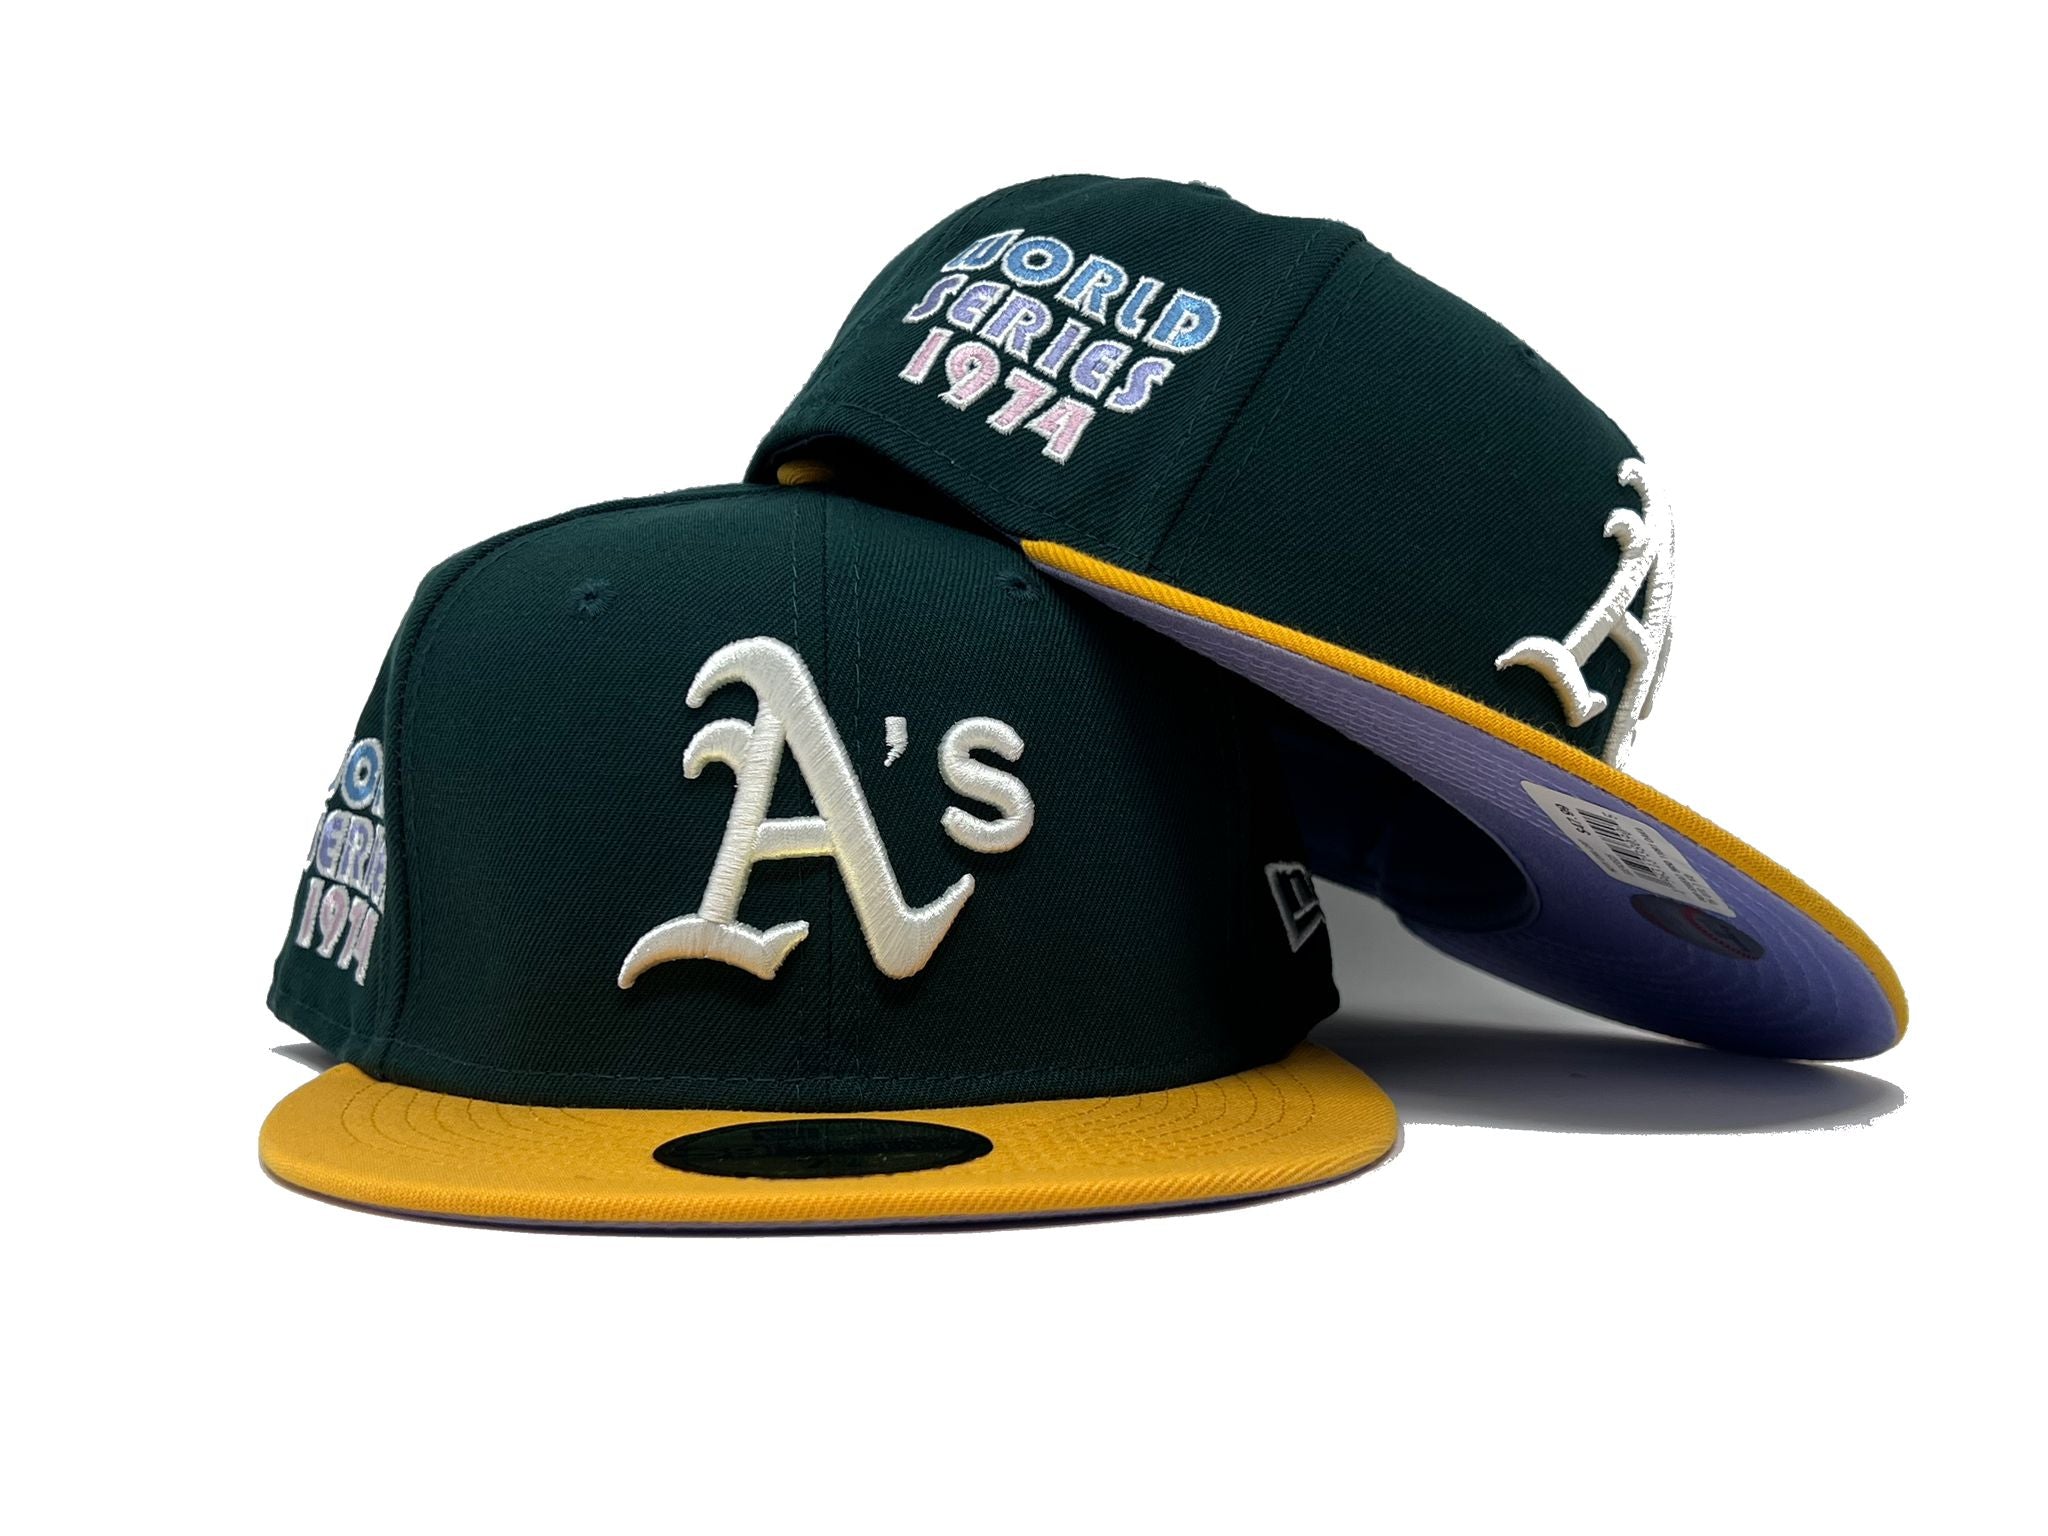 Oakland Athletics A's Wristband MLB Pro Shop Baseball Game Team  Apparel Fan Gear